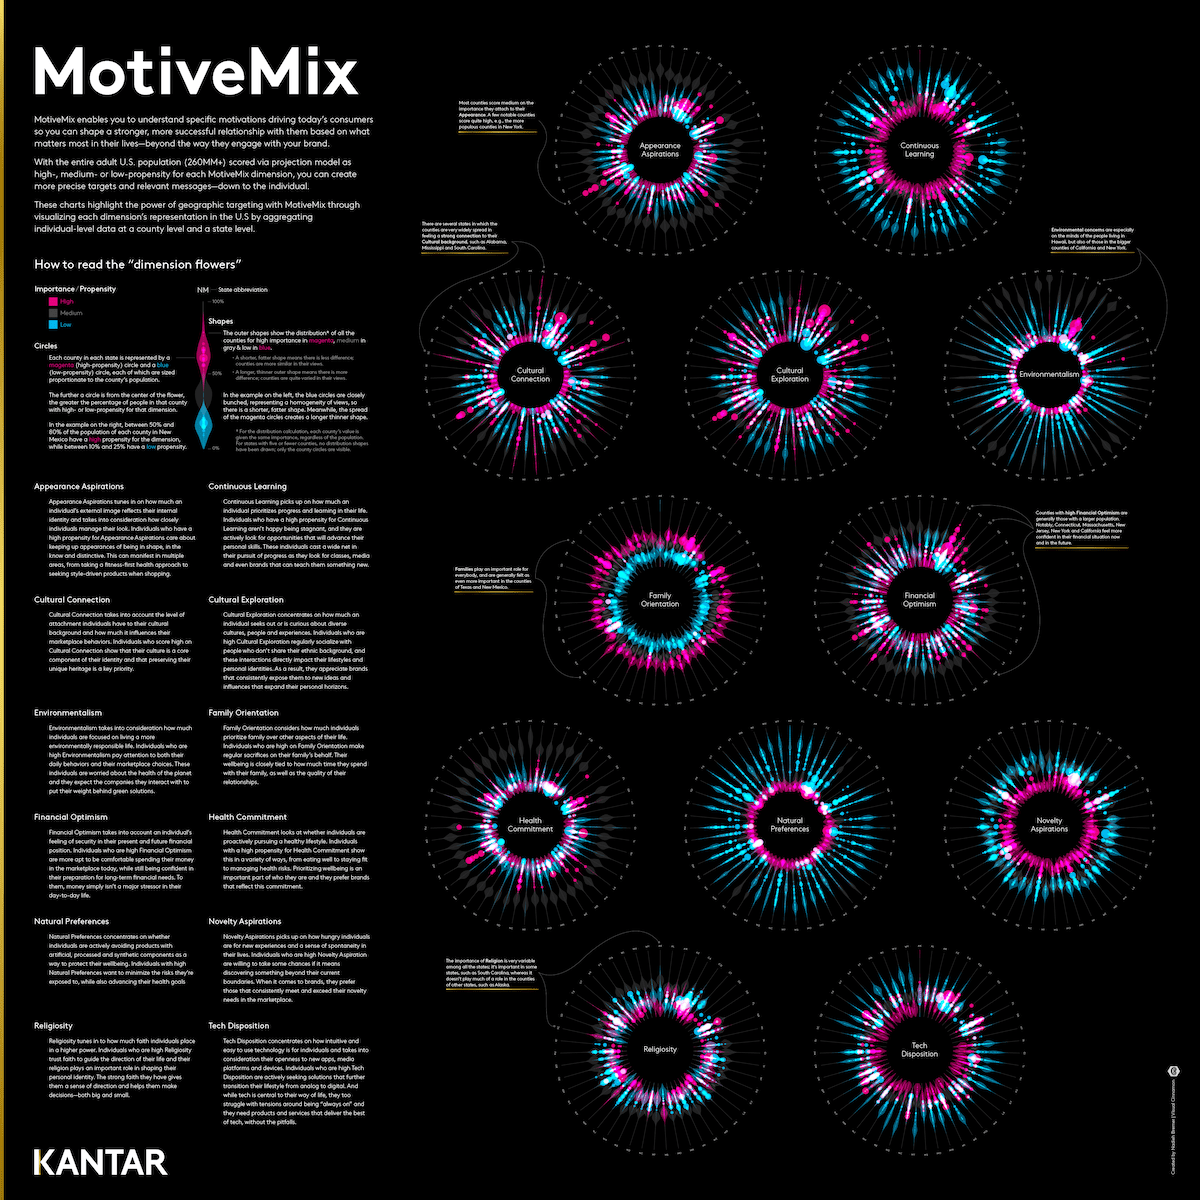 The black version of the poster about Kantar's MotiveMix dataset